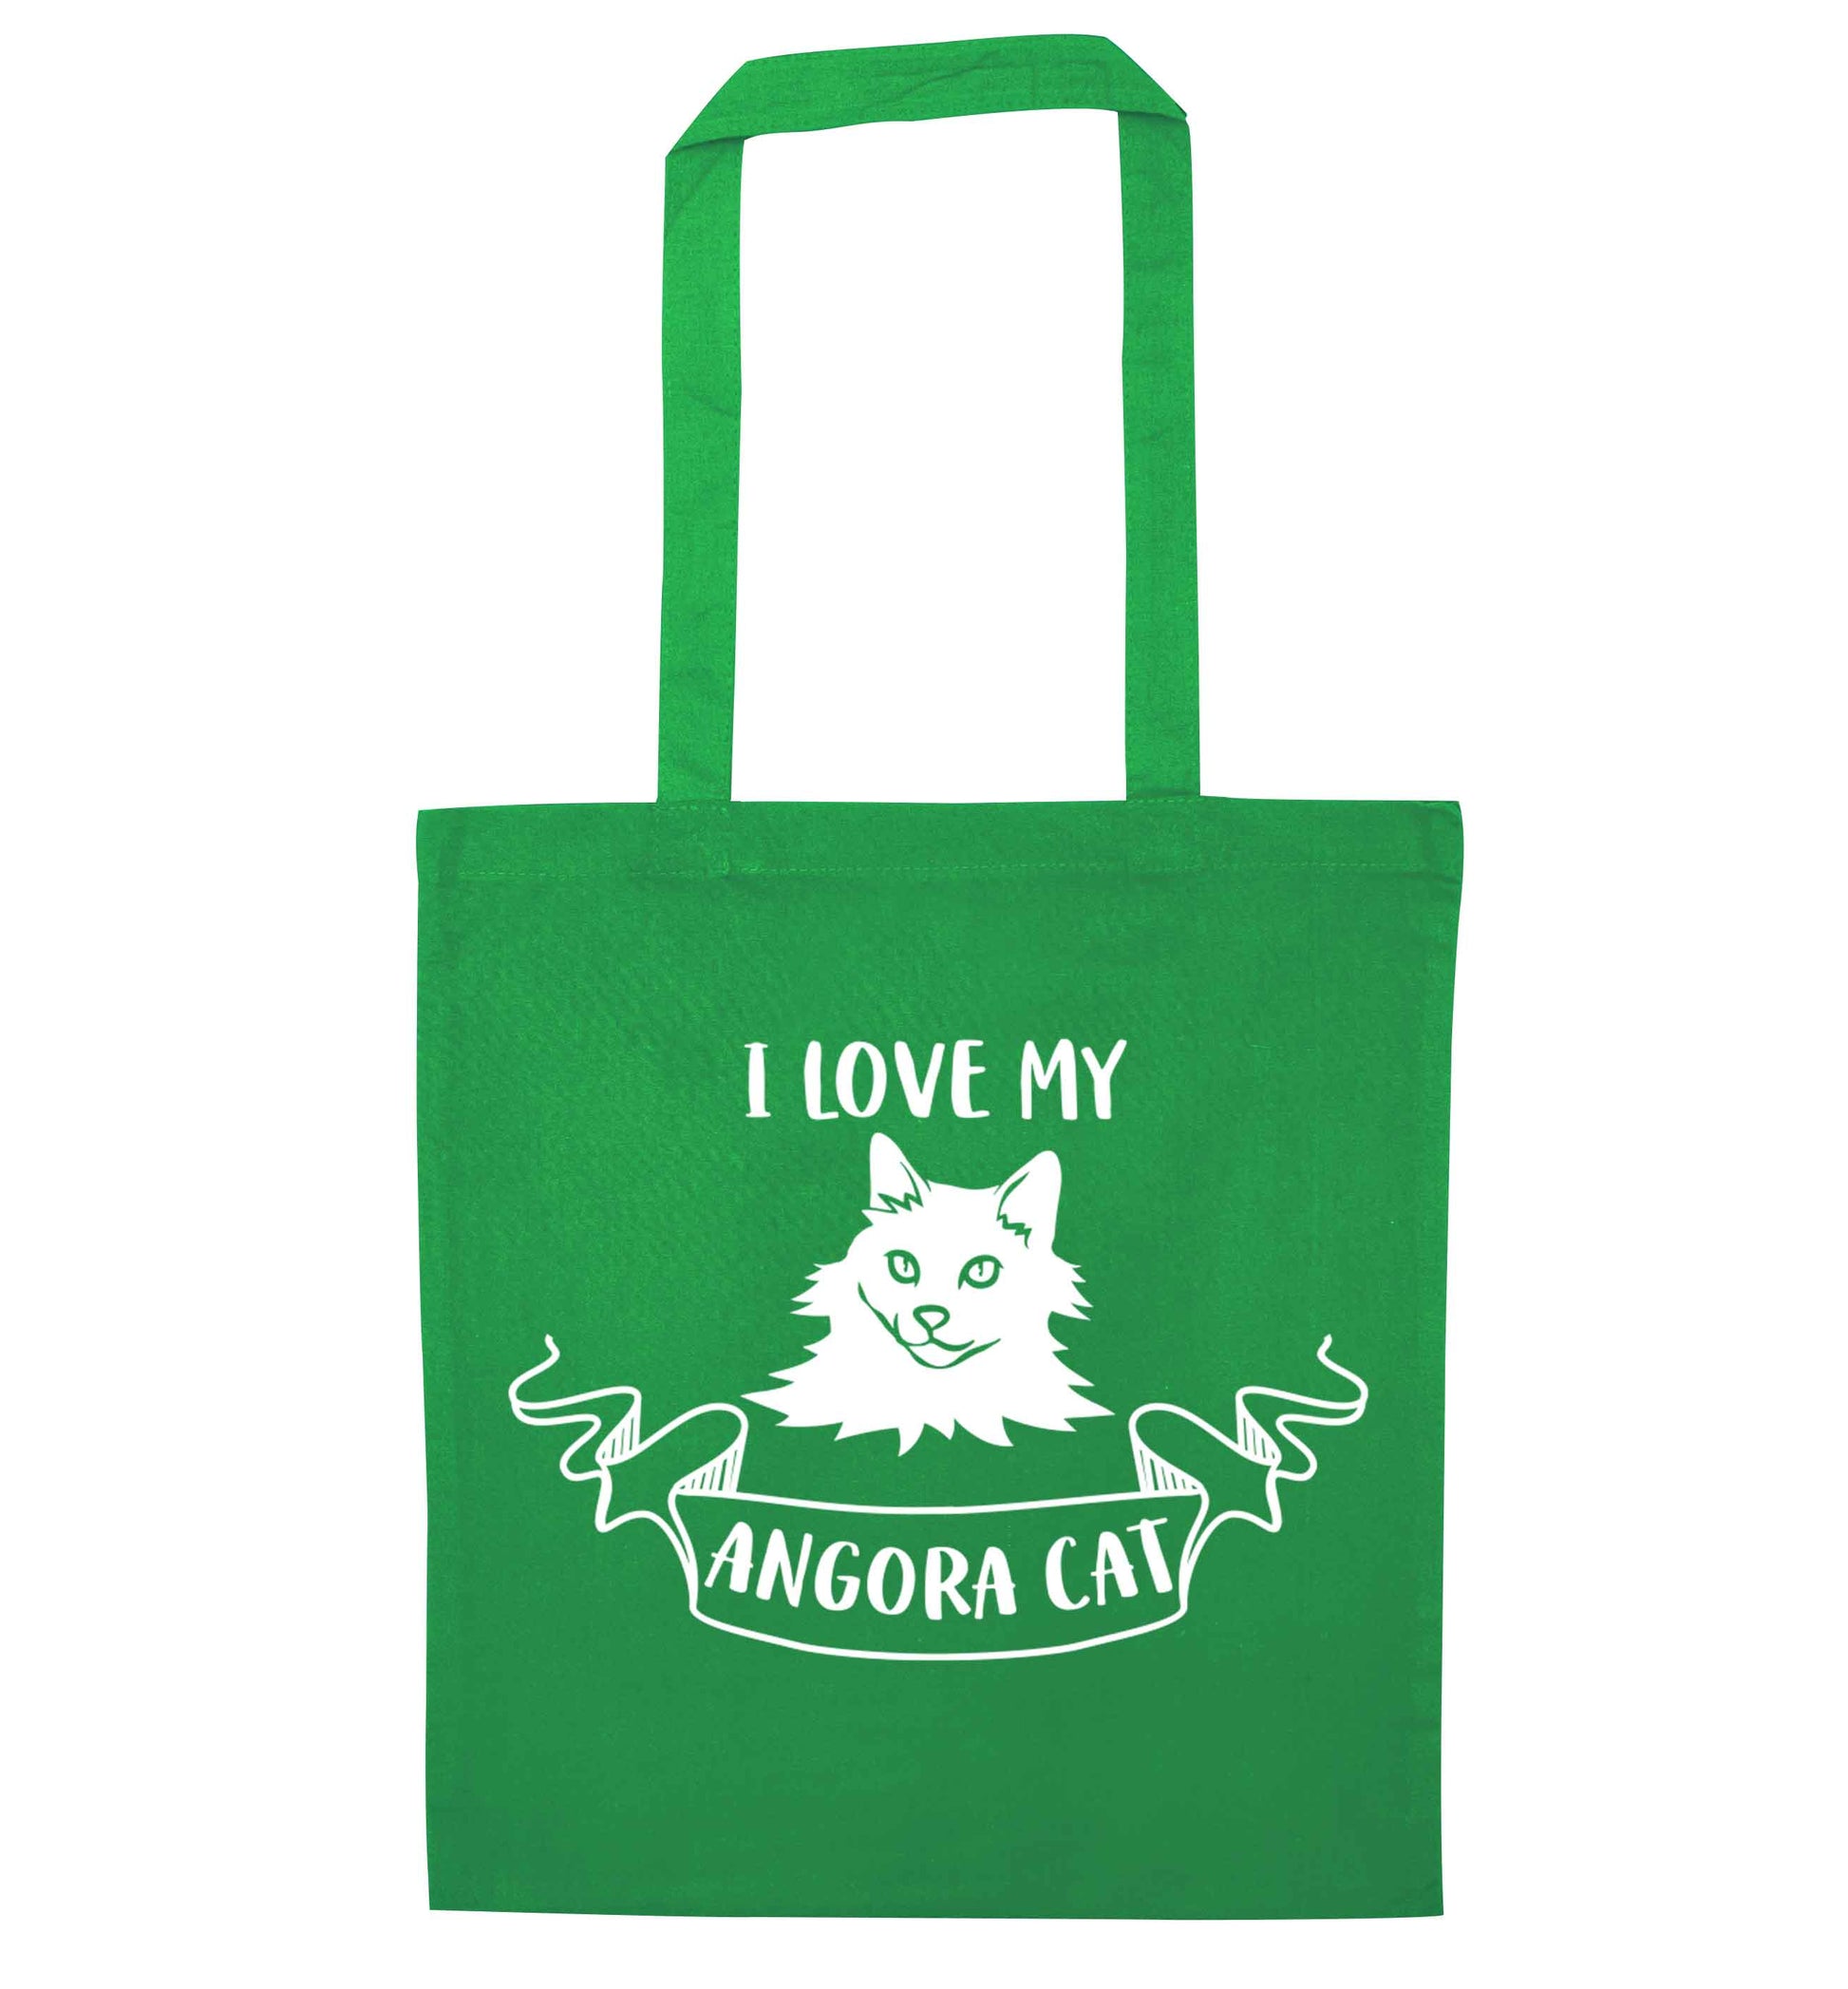 I love my angora cat green tote bag